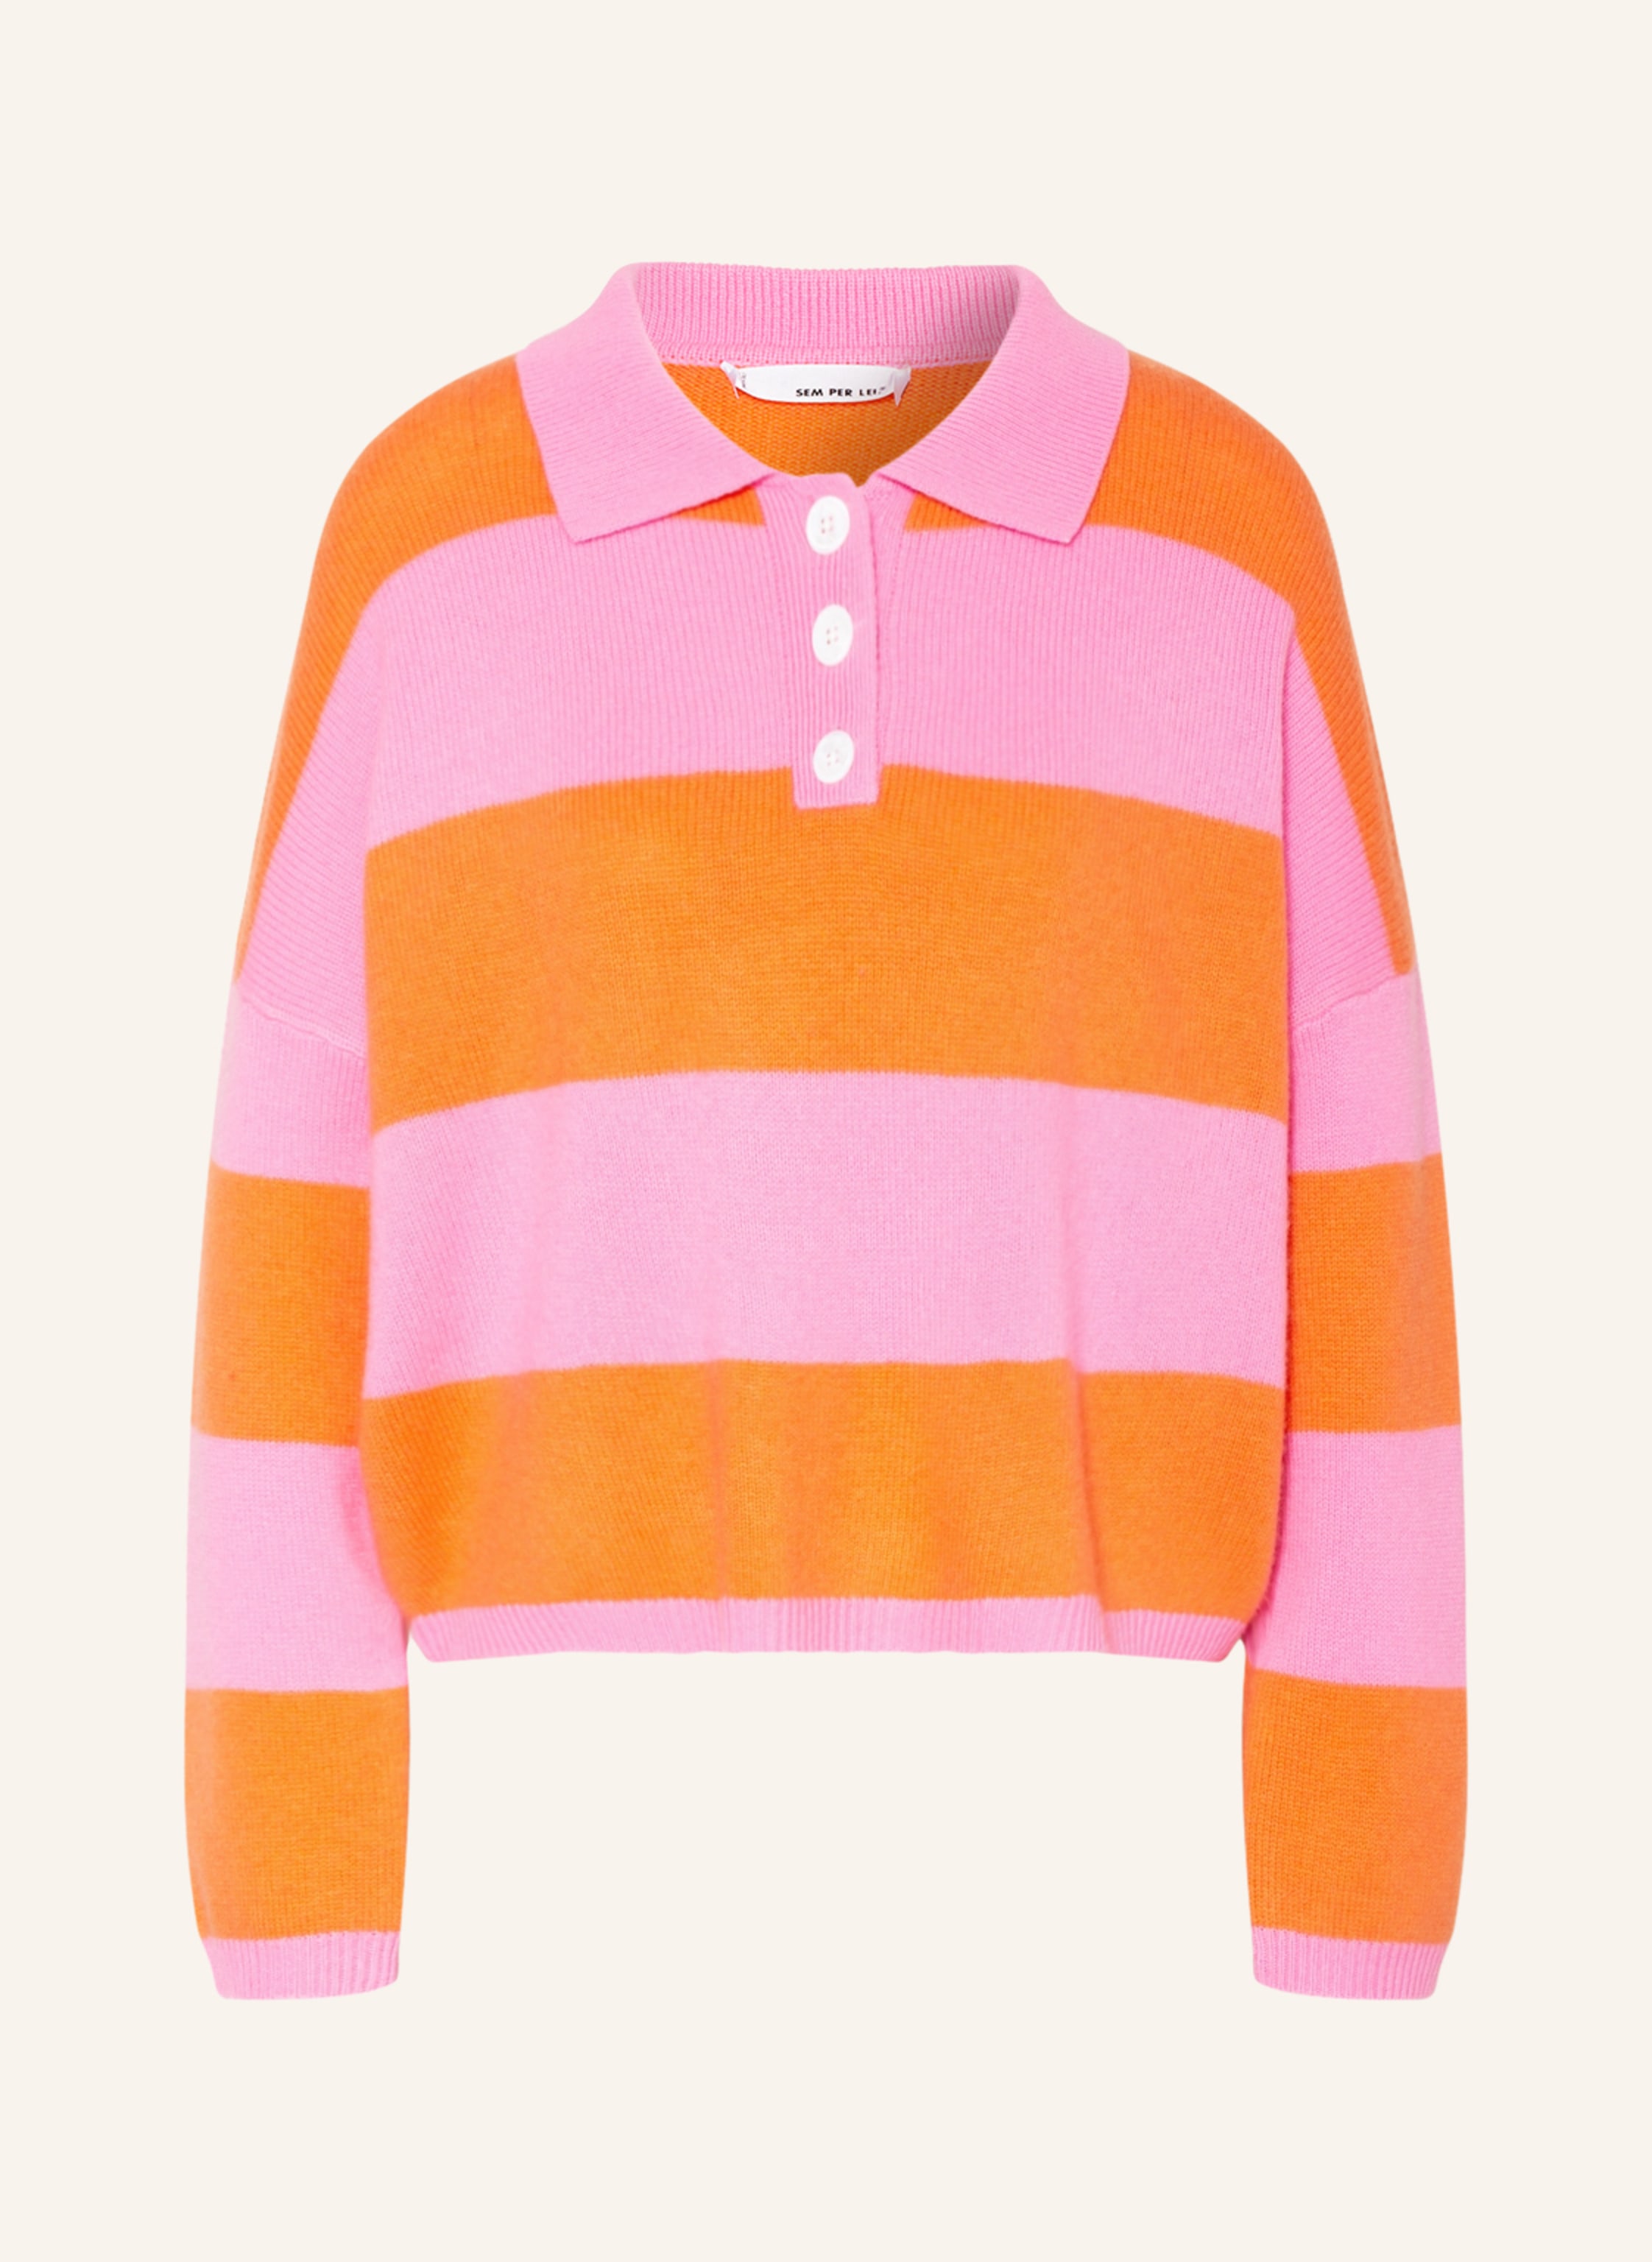 PER Cashmere orange/ in LEI SEM Strick-Poloshirt rosa mit